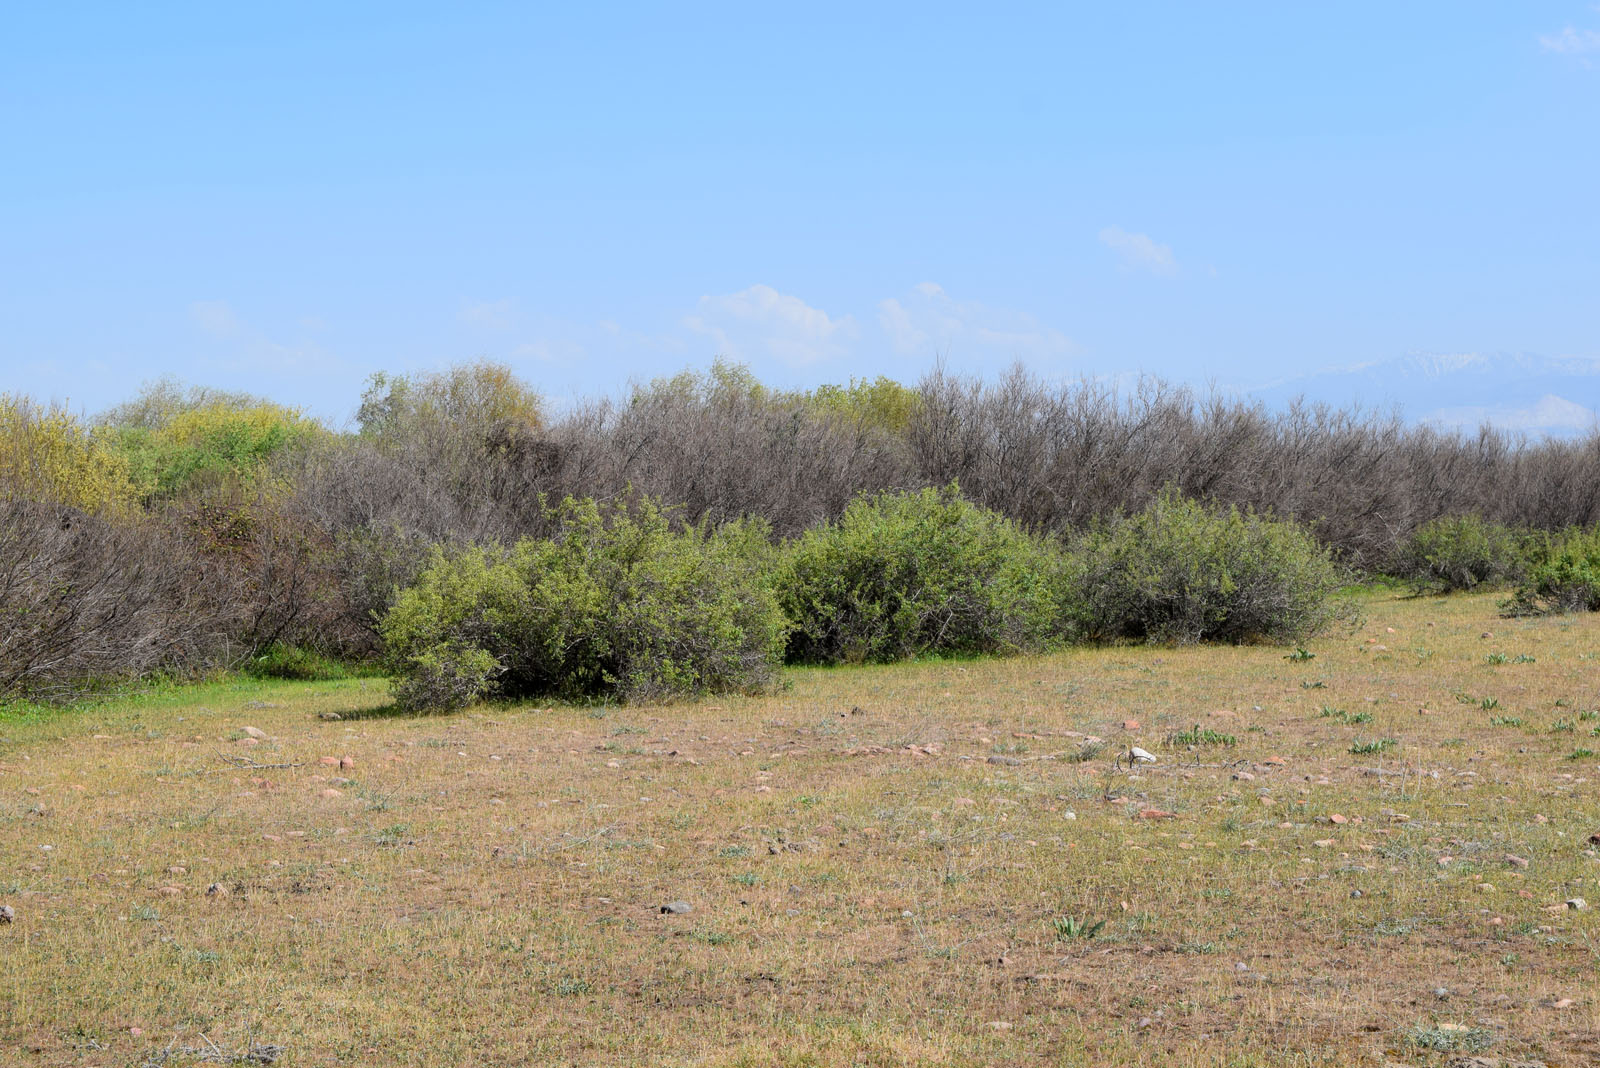 Окрестности кишлака Айбулак, изображение ландшафта.